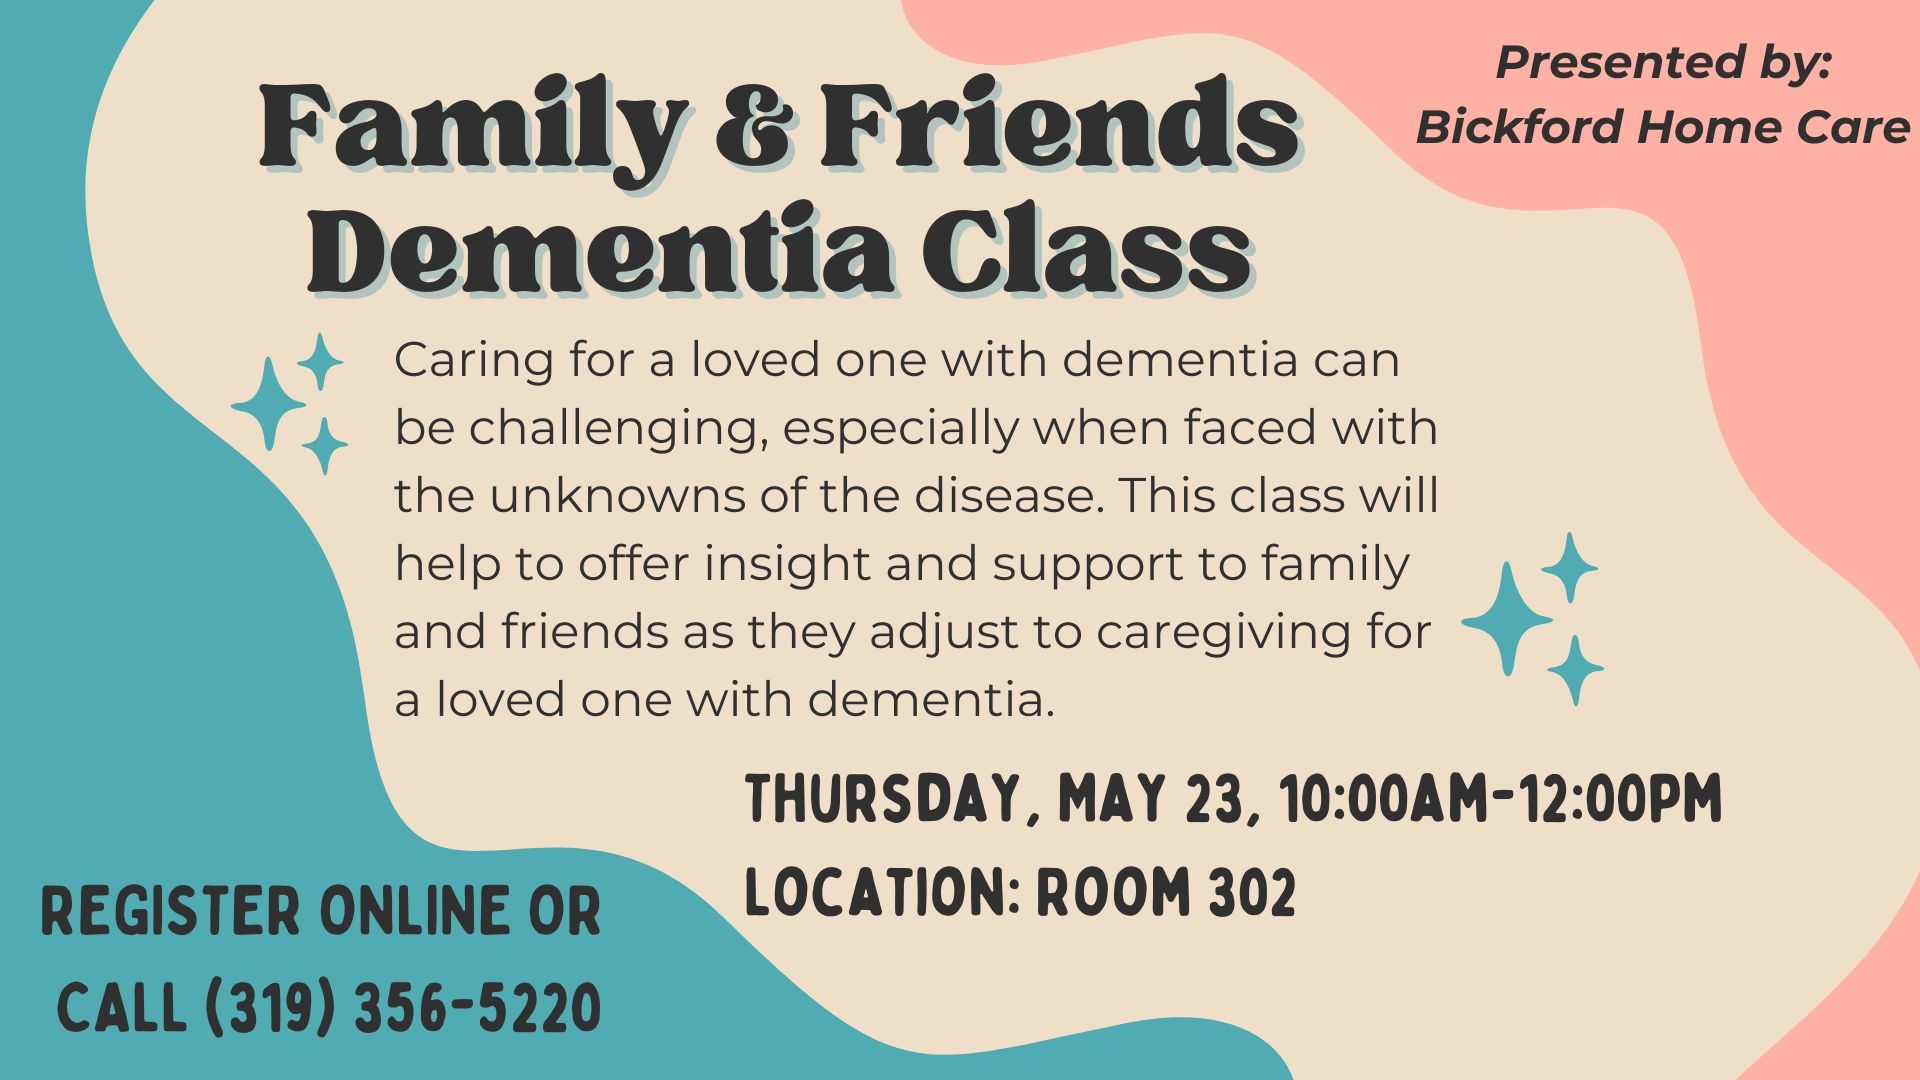 Family & Friends Dementia Class